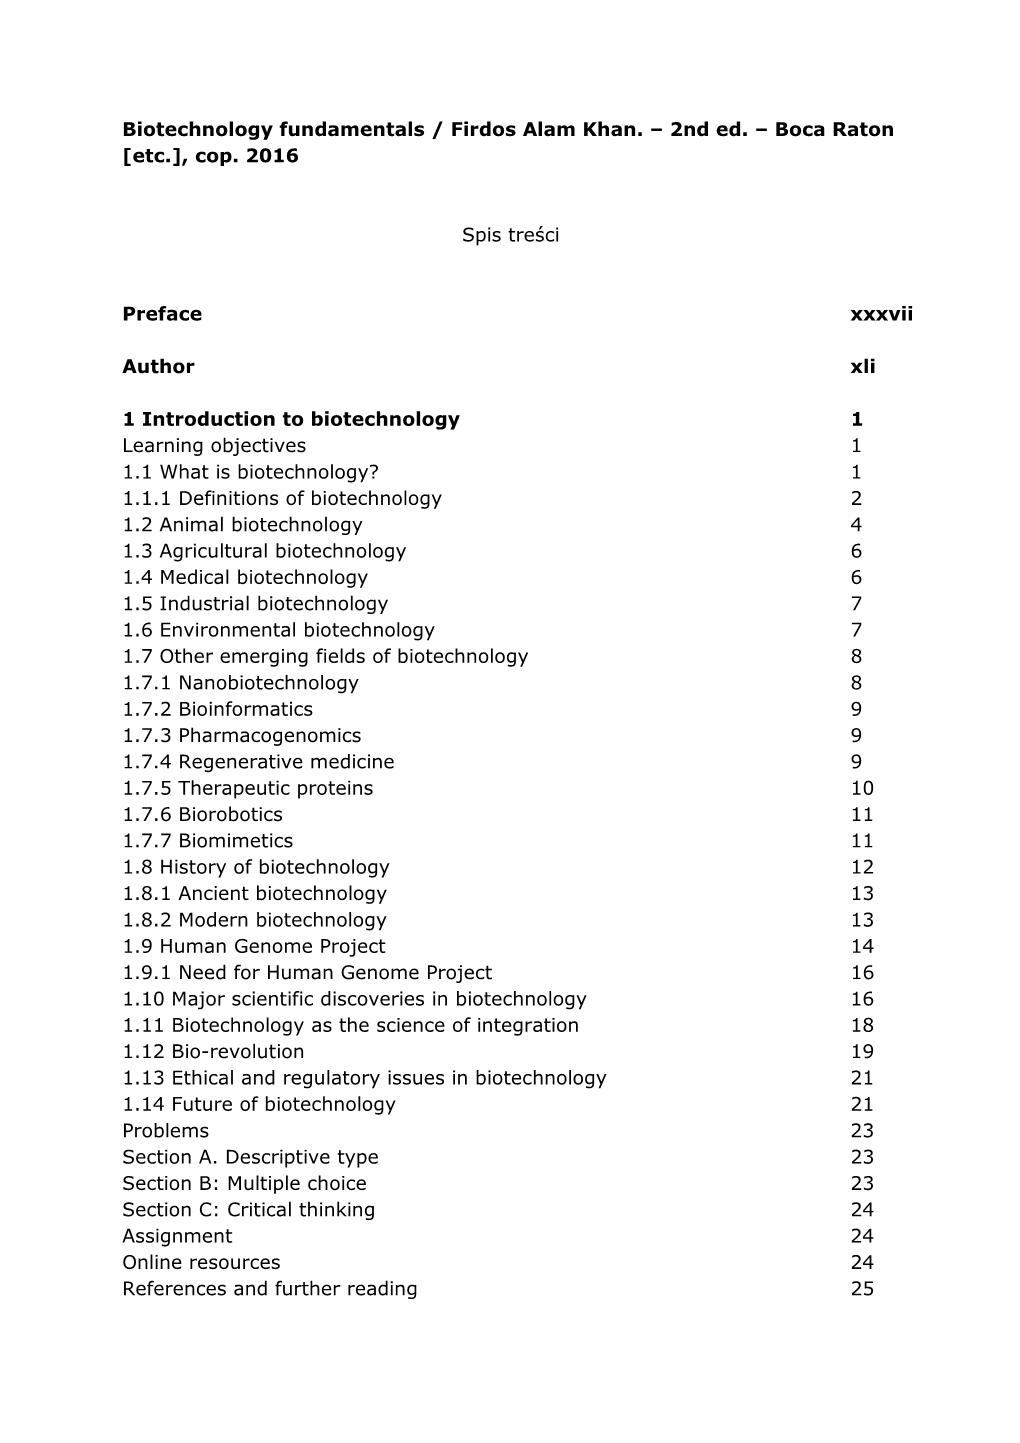 Biotechnology Fundamentals / Firdos Alam Khan. – 2Nd Ed. – Boca Raton [Etc.], Cop. 2016 Spis Treści Preface Xxxvii Author